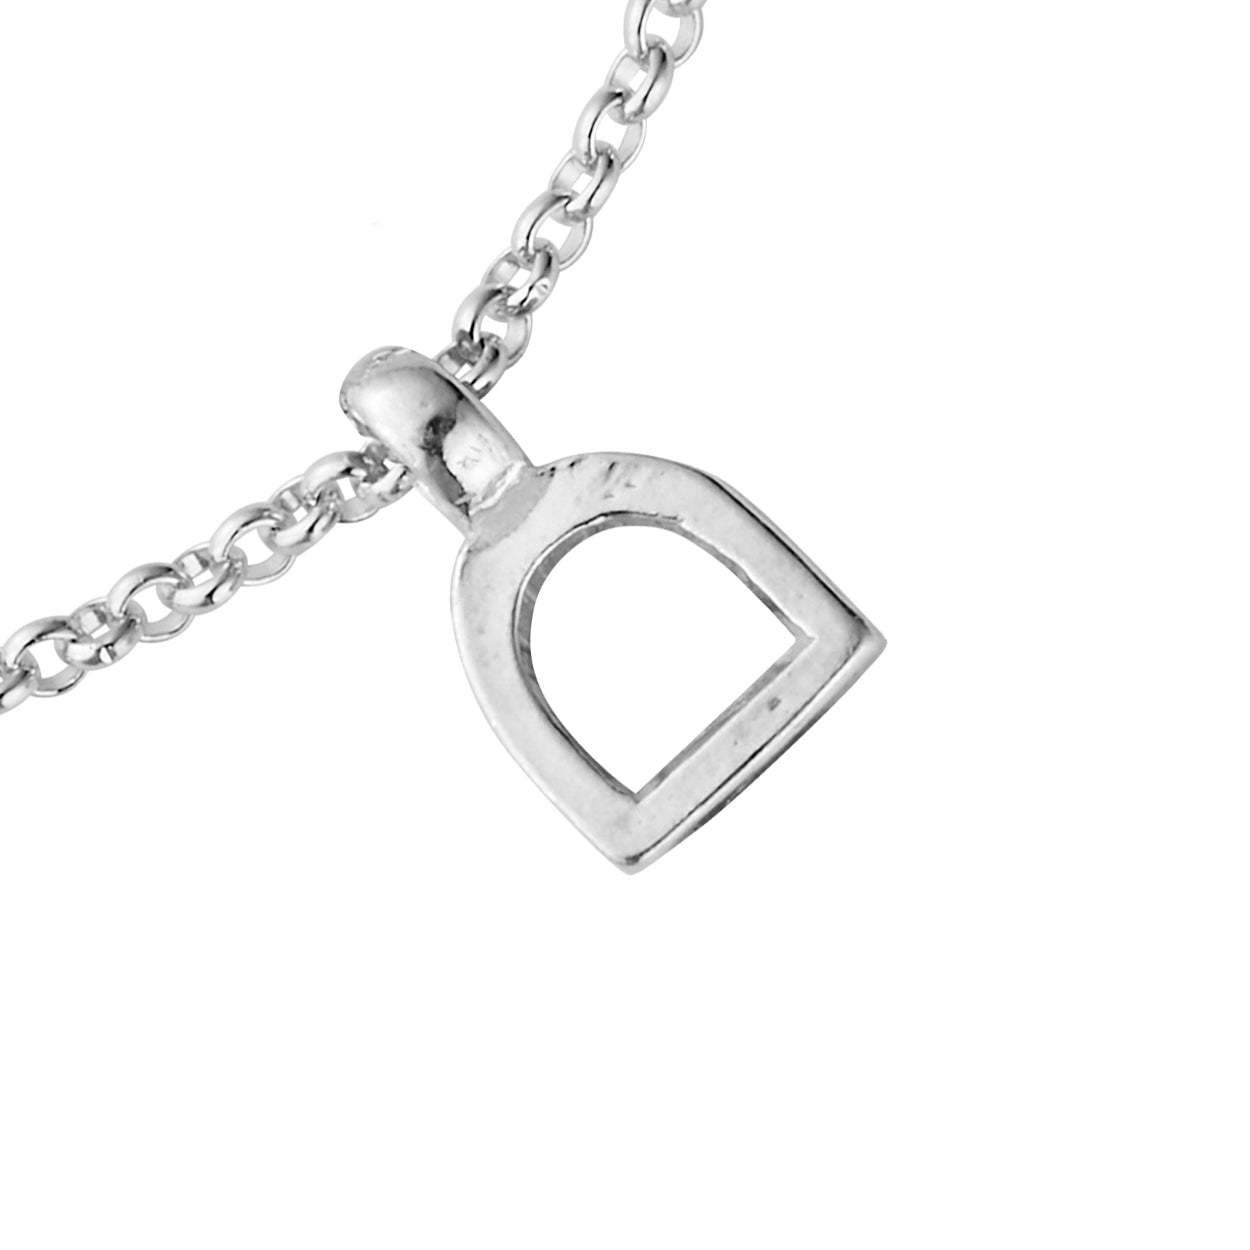 Silver Baby Stirrup Chain Bracelet